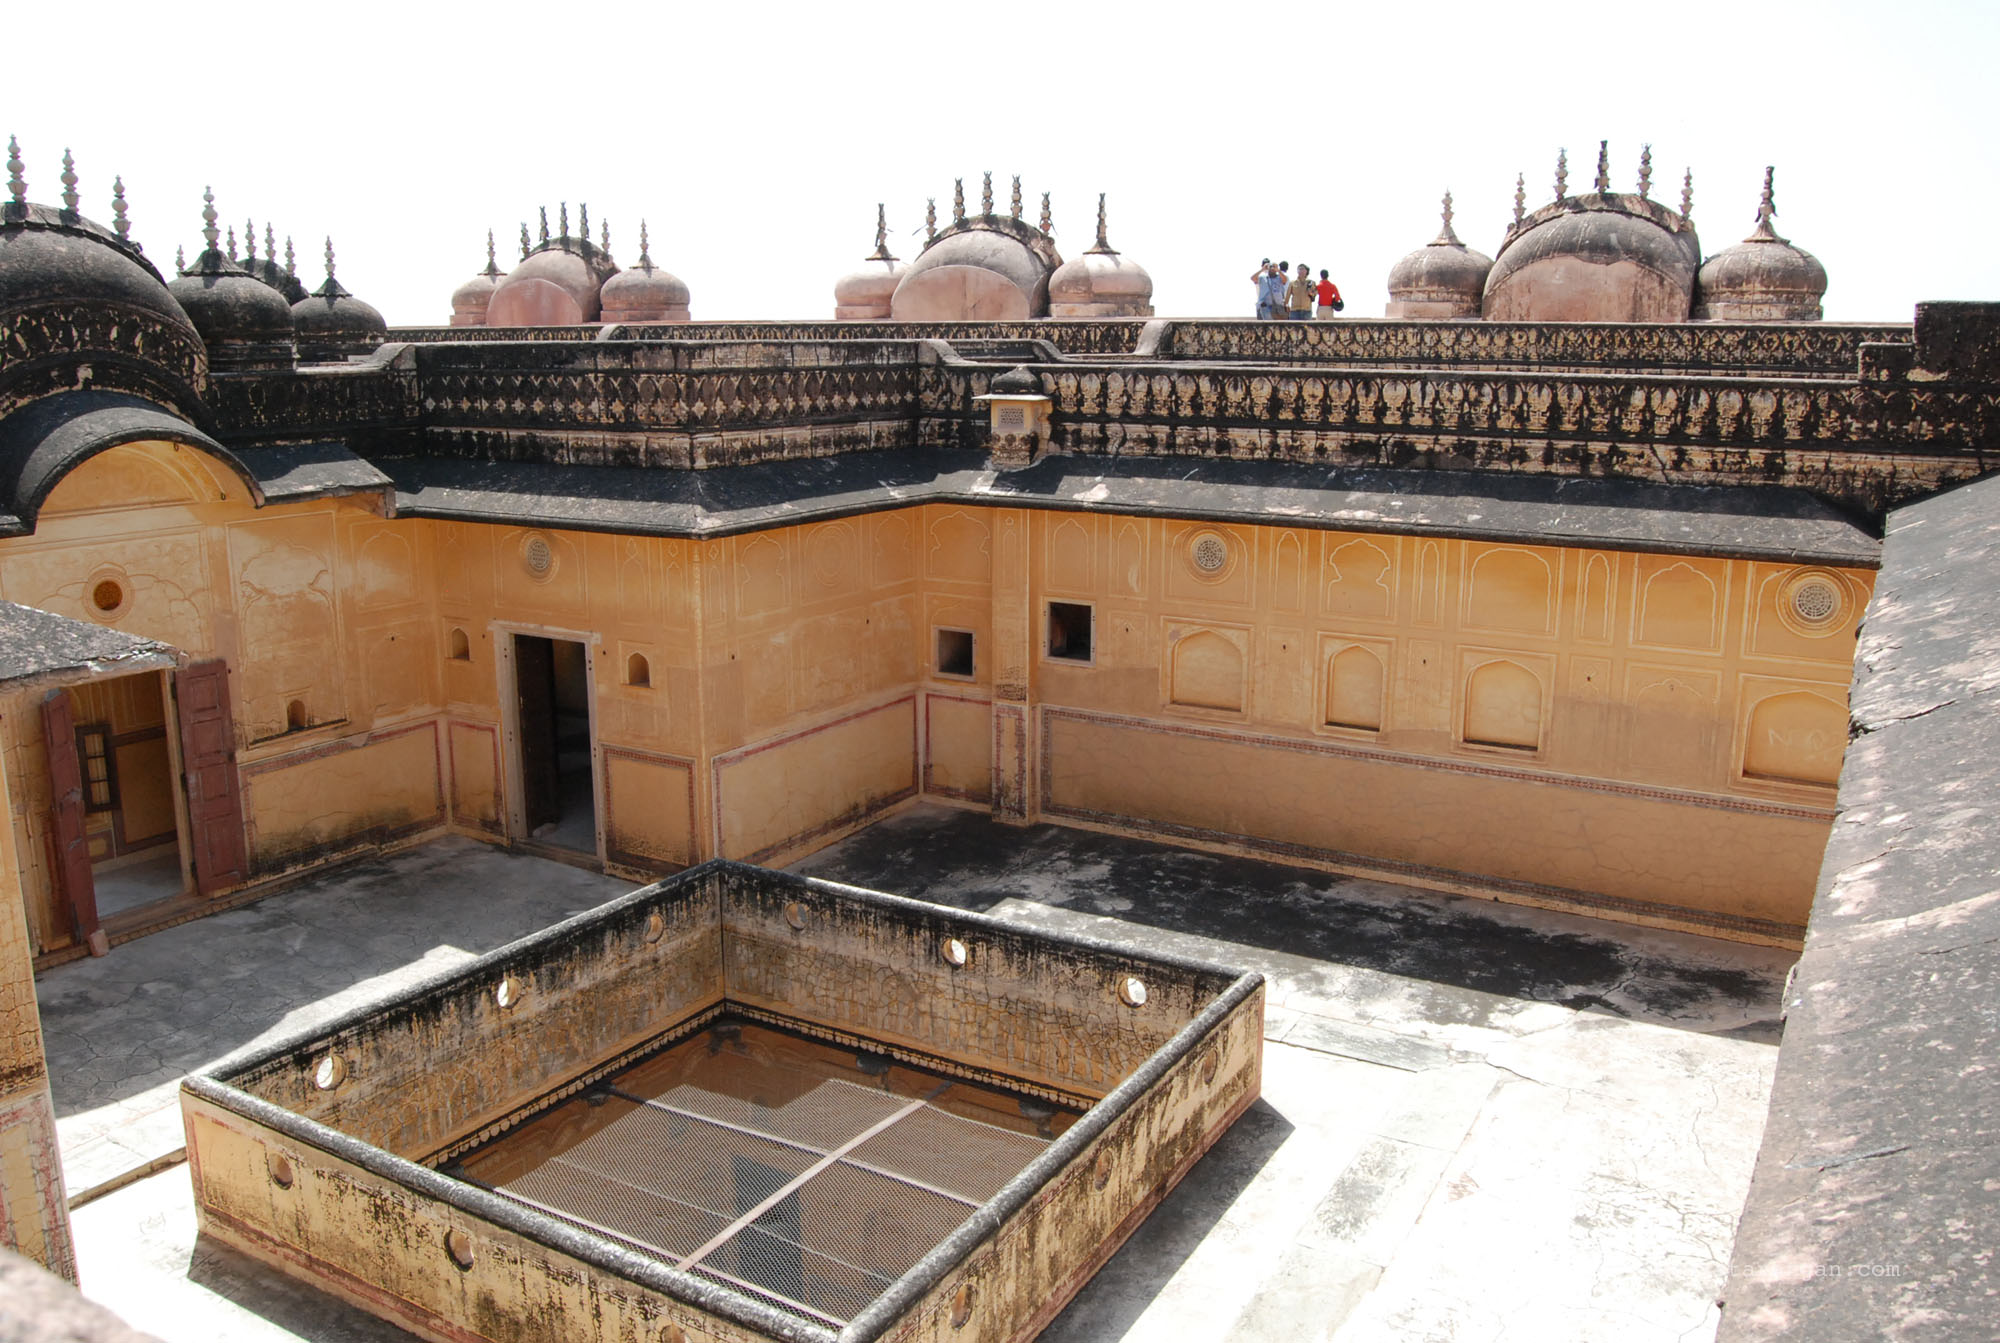 Roof terrace of Nahargarh Fort